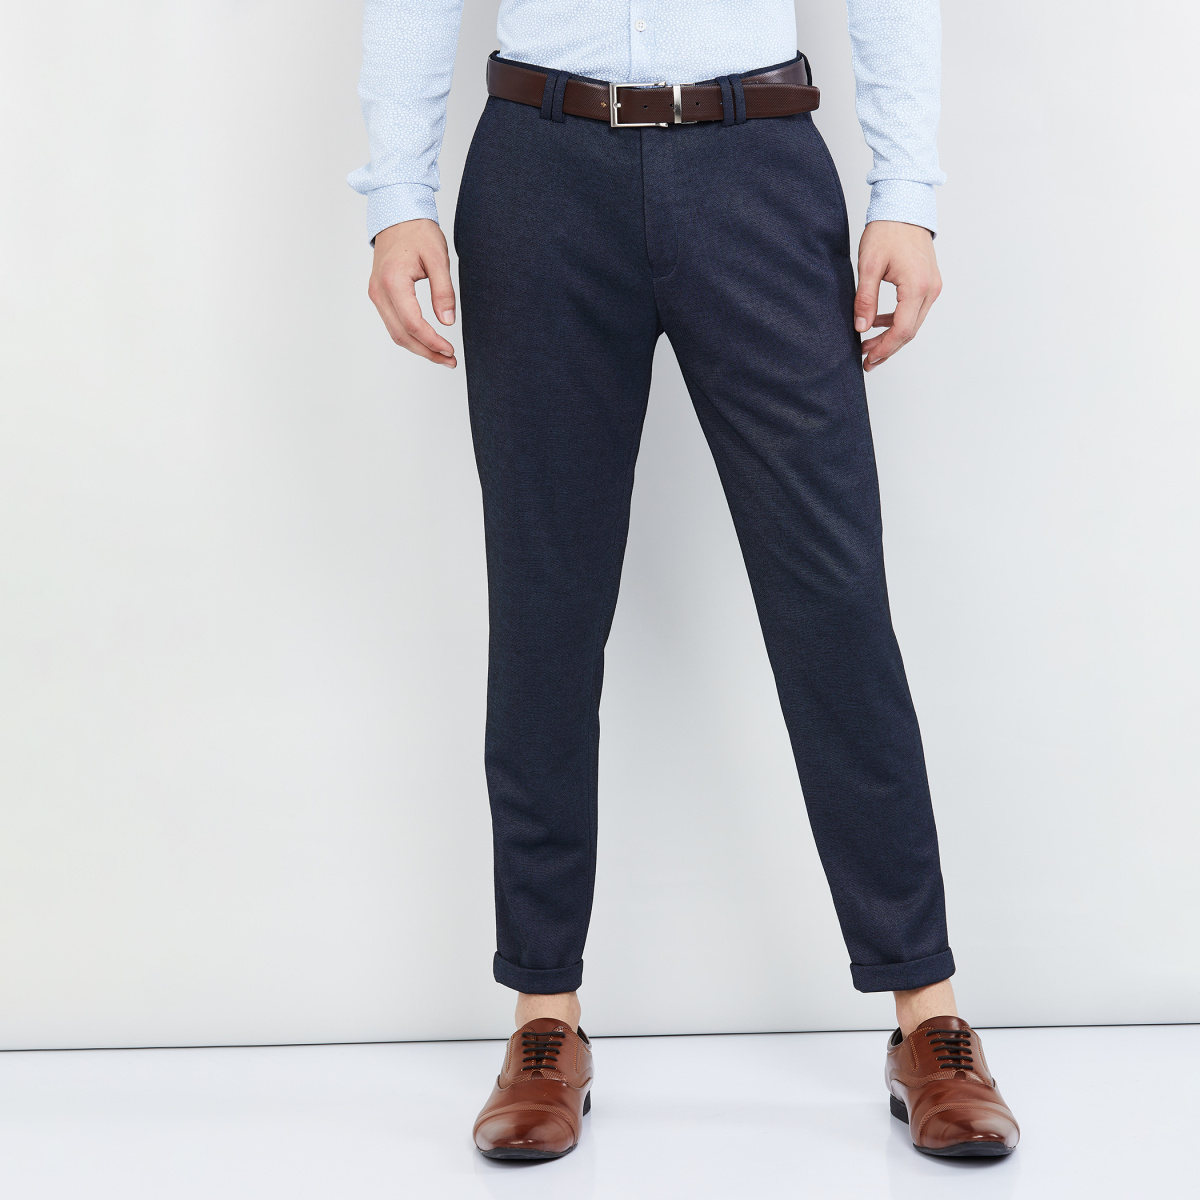 35 Men's Formal Pant style ideas | fashion pants, formal pant style, formal  pant